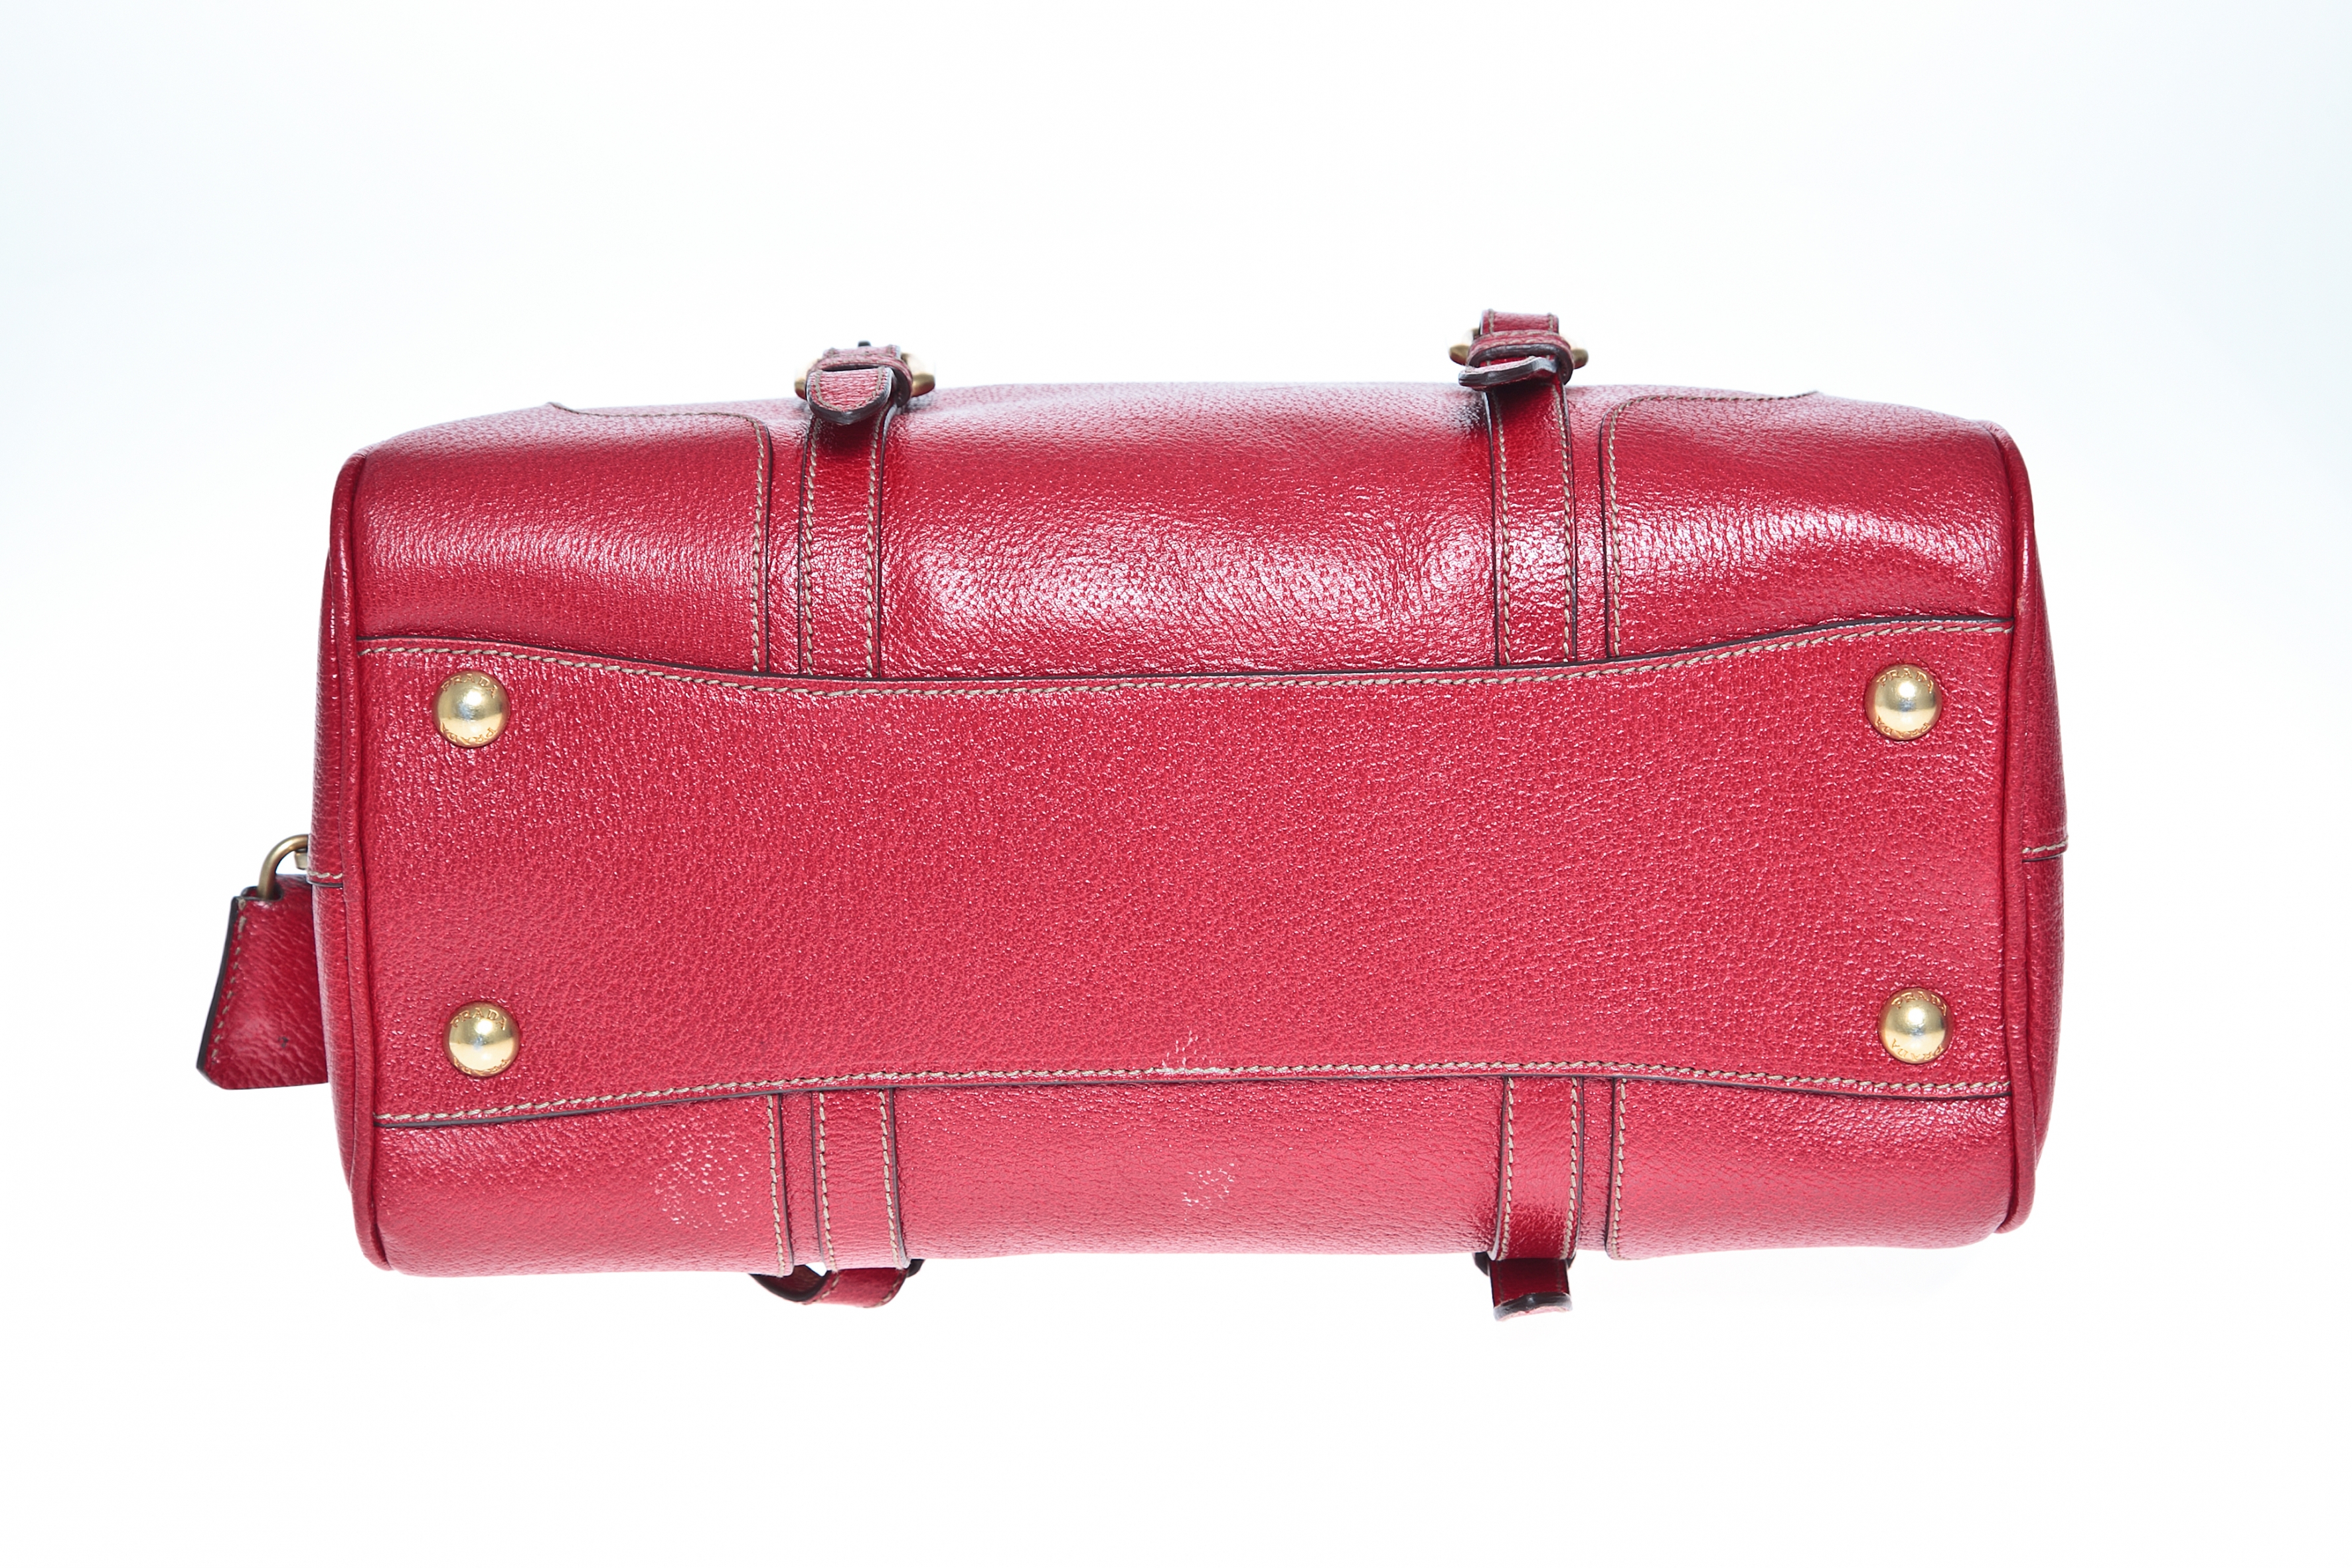 Prada red leather handbag | Vintage Shop in Mykonos